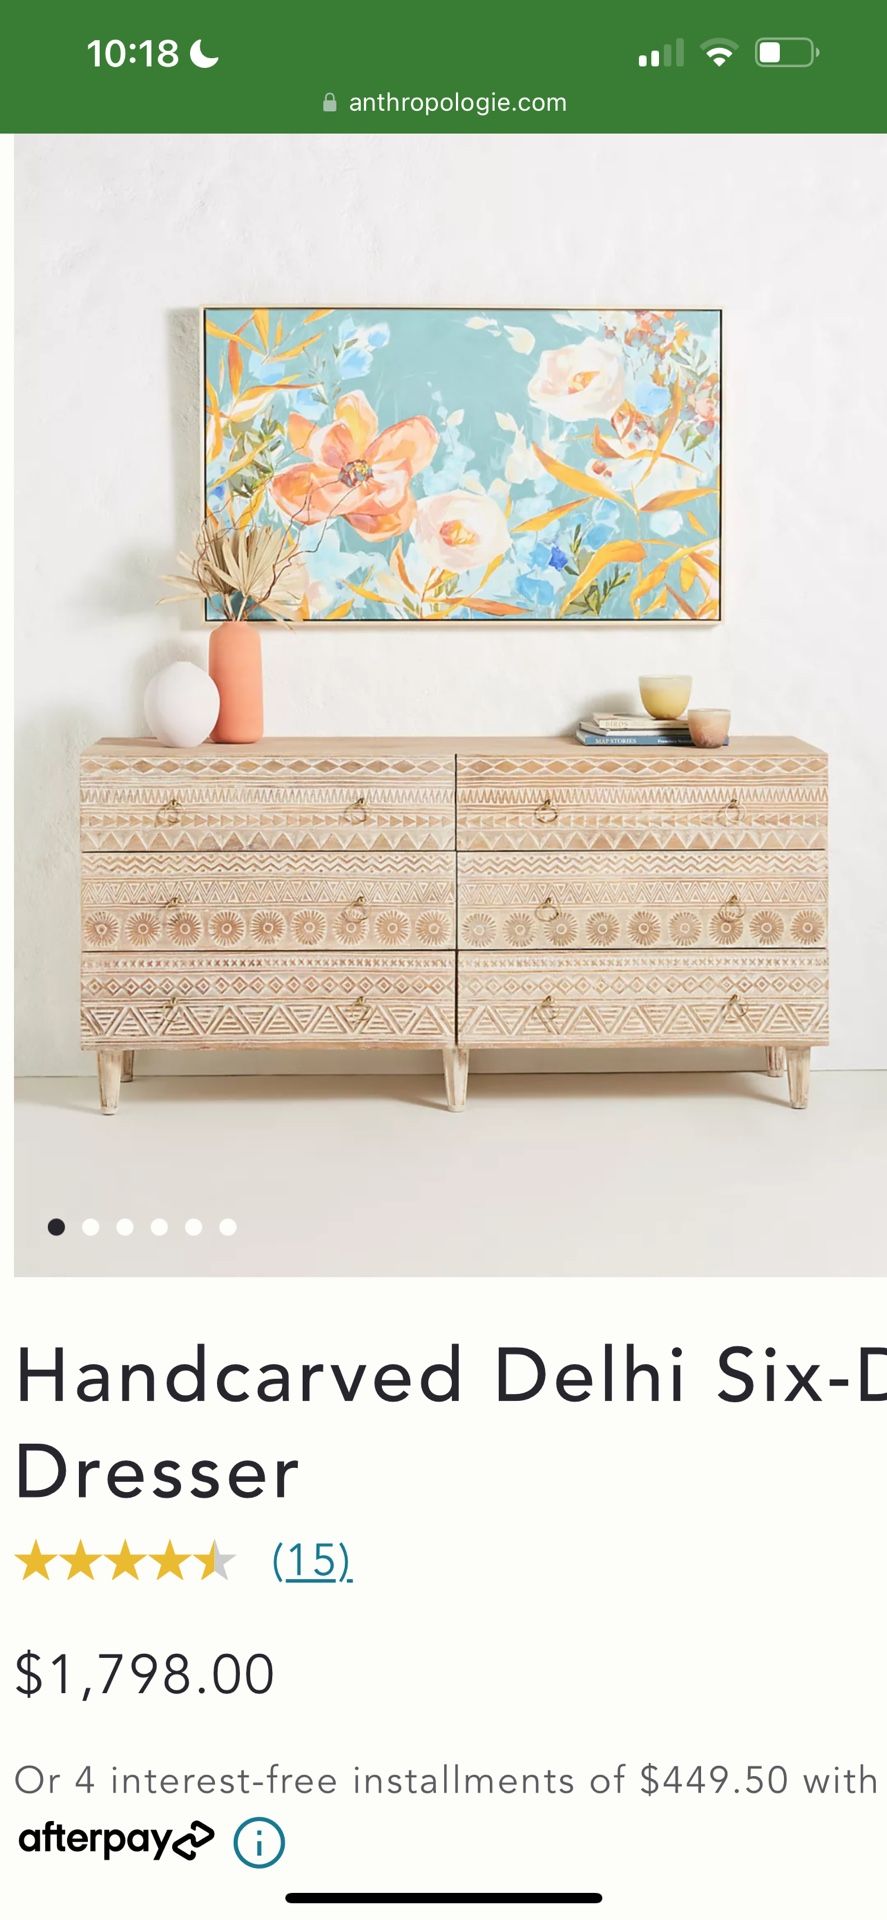 Anthropologie Delhi Dresser